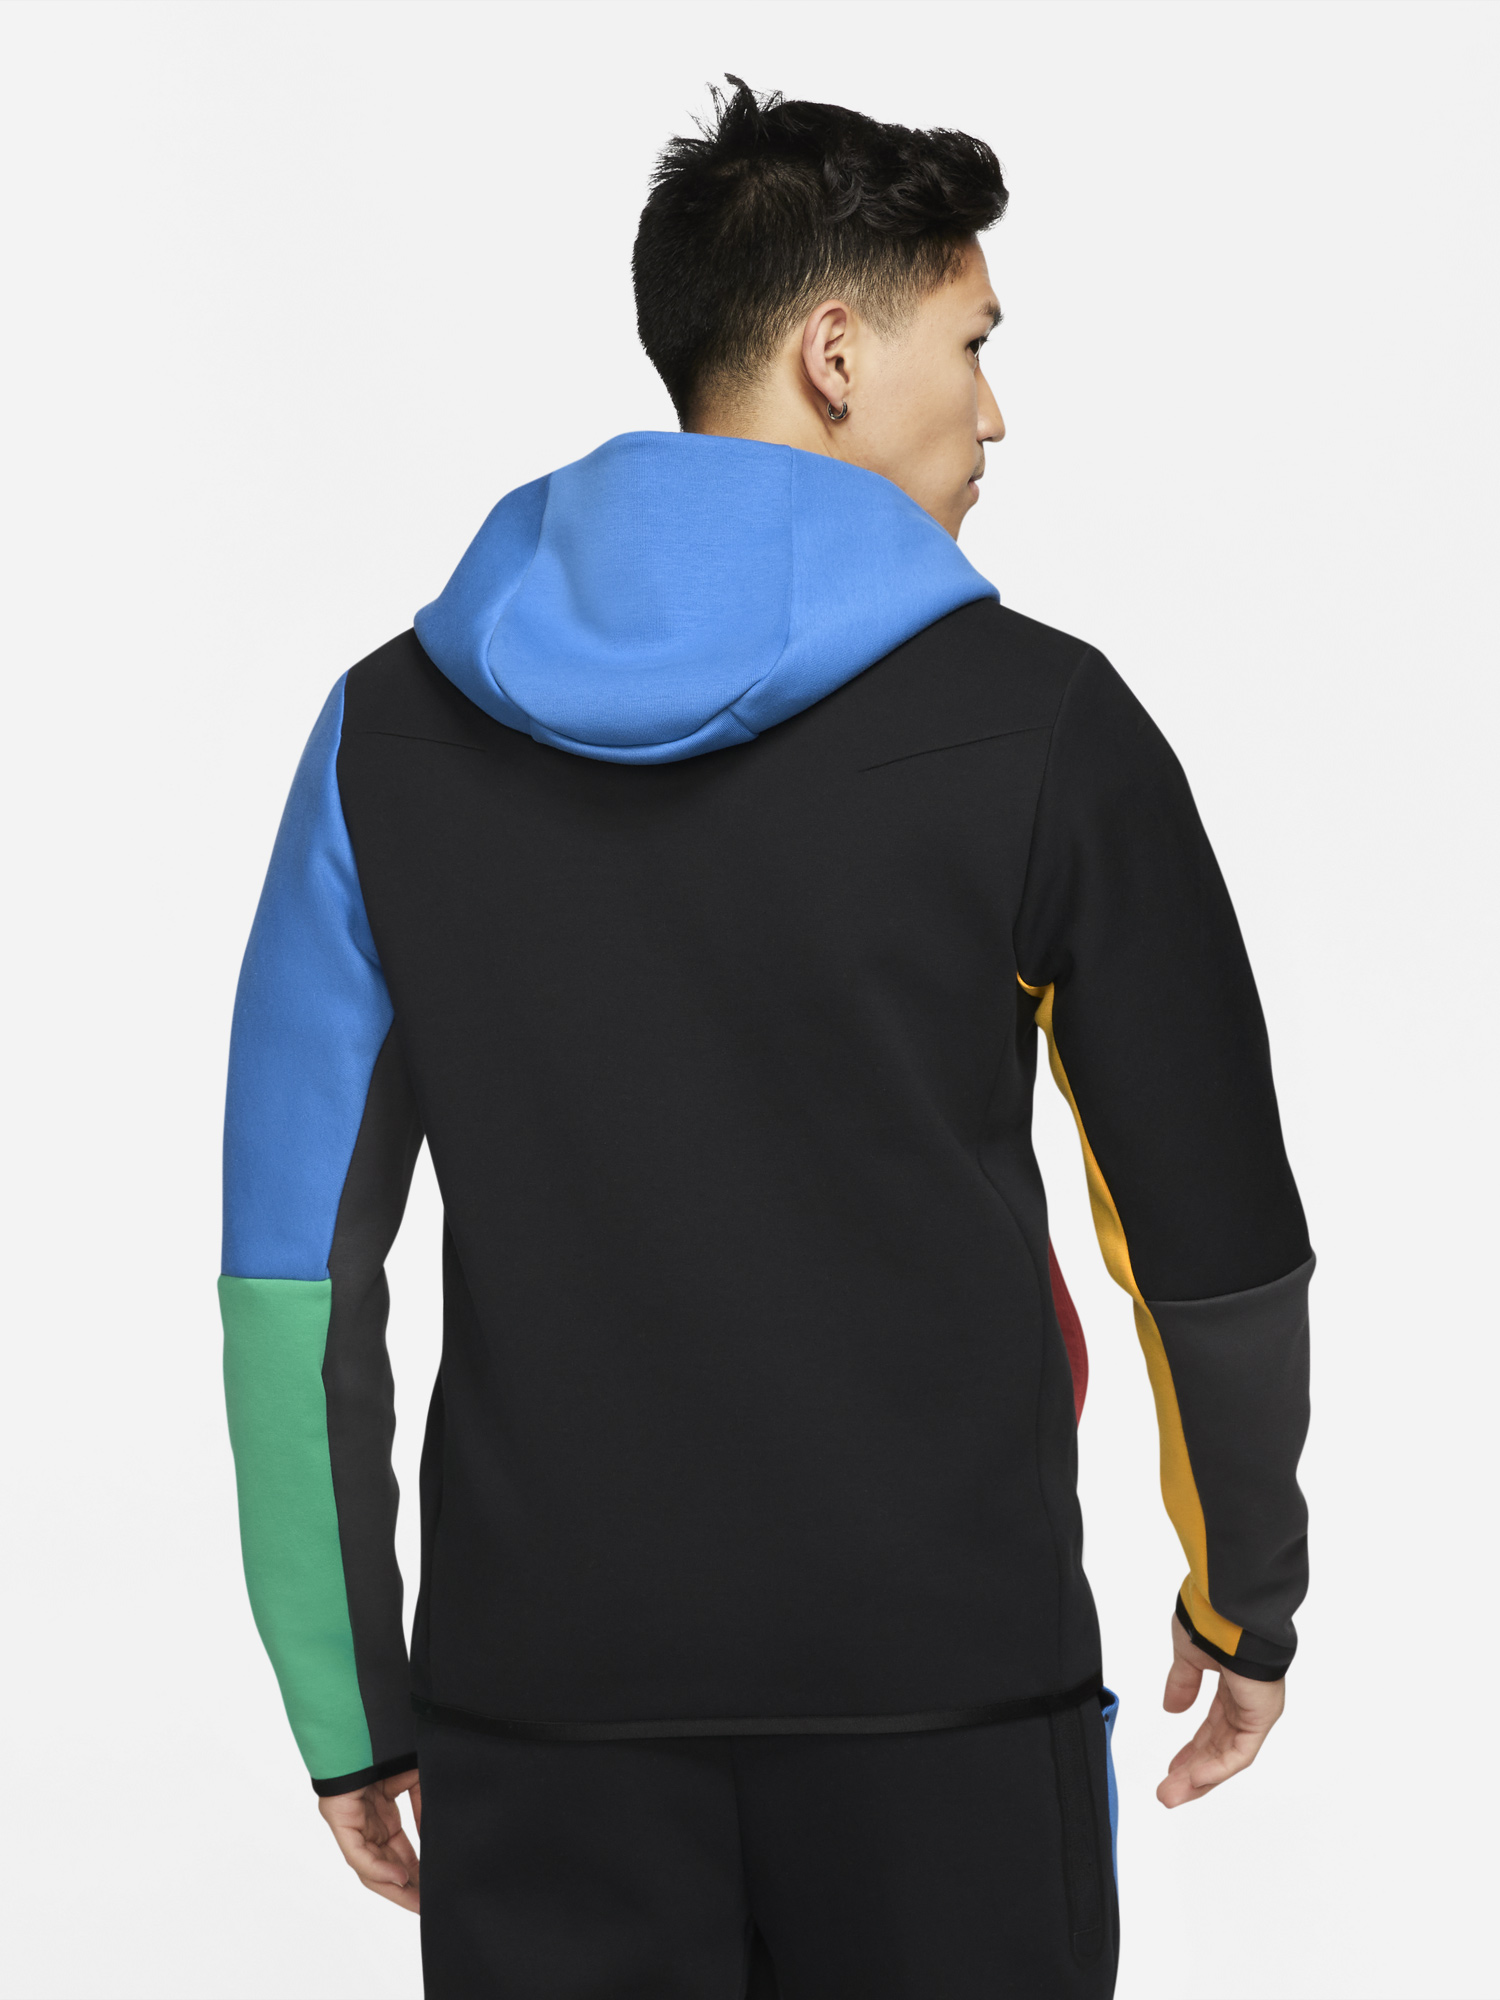 Nike Tech Fleece Multi Color Hoodies for Fall 2021